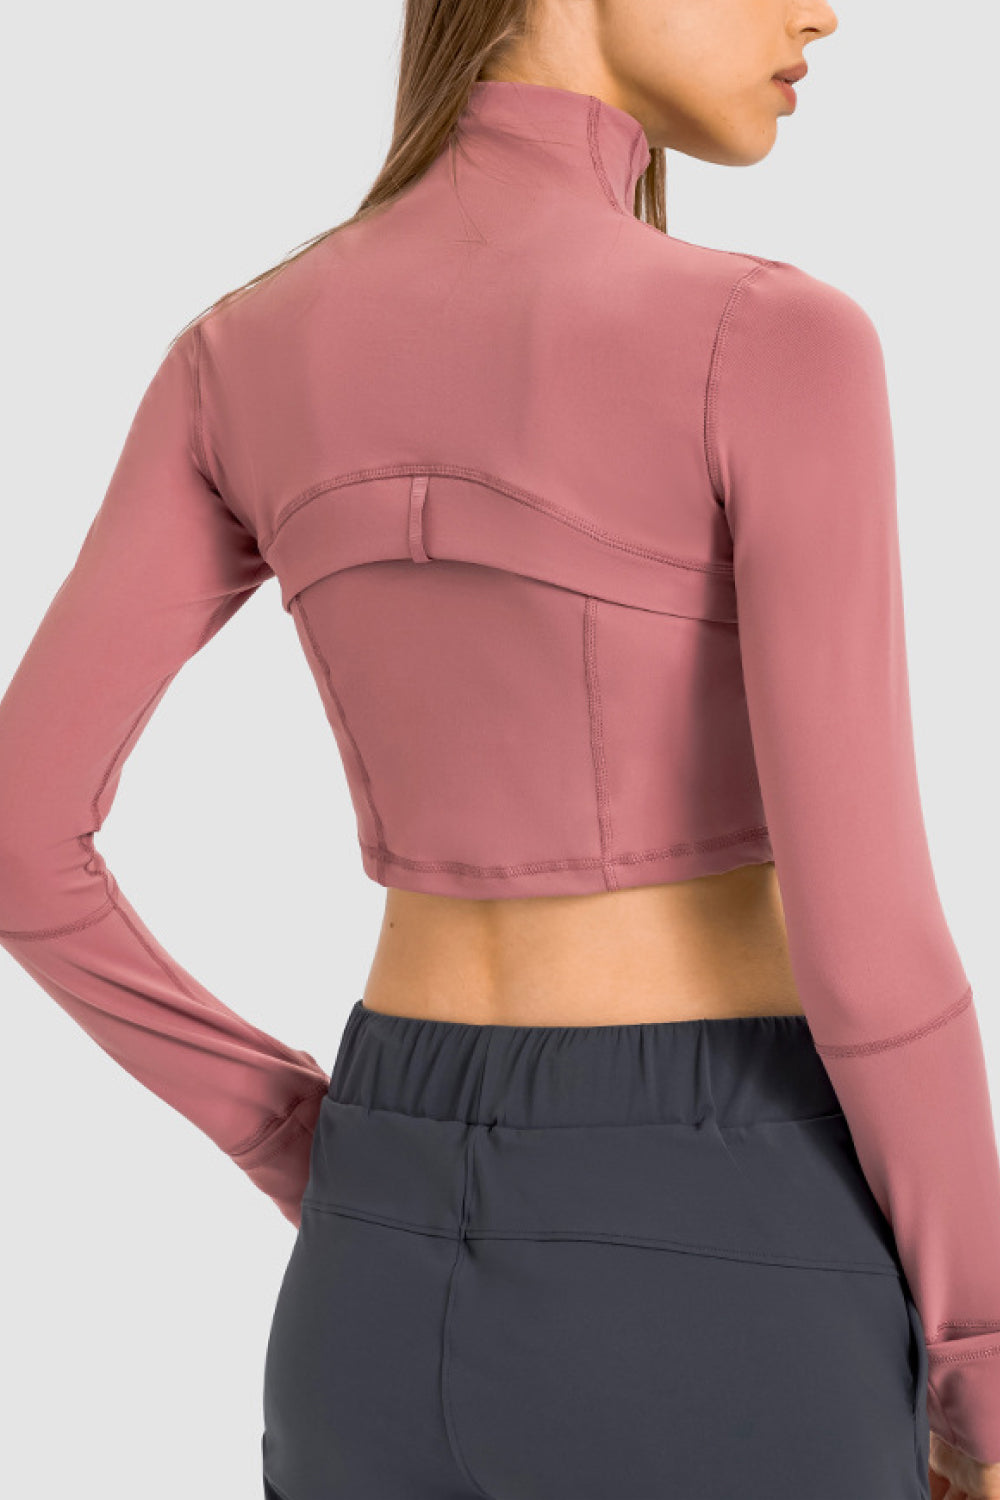 FormFit Conquer Jacket Myla Pink – VITAE APPAREL